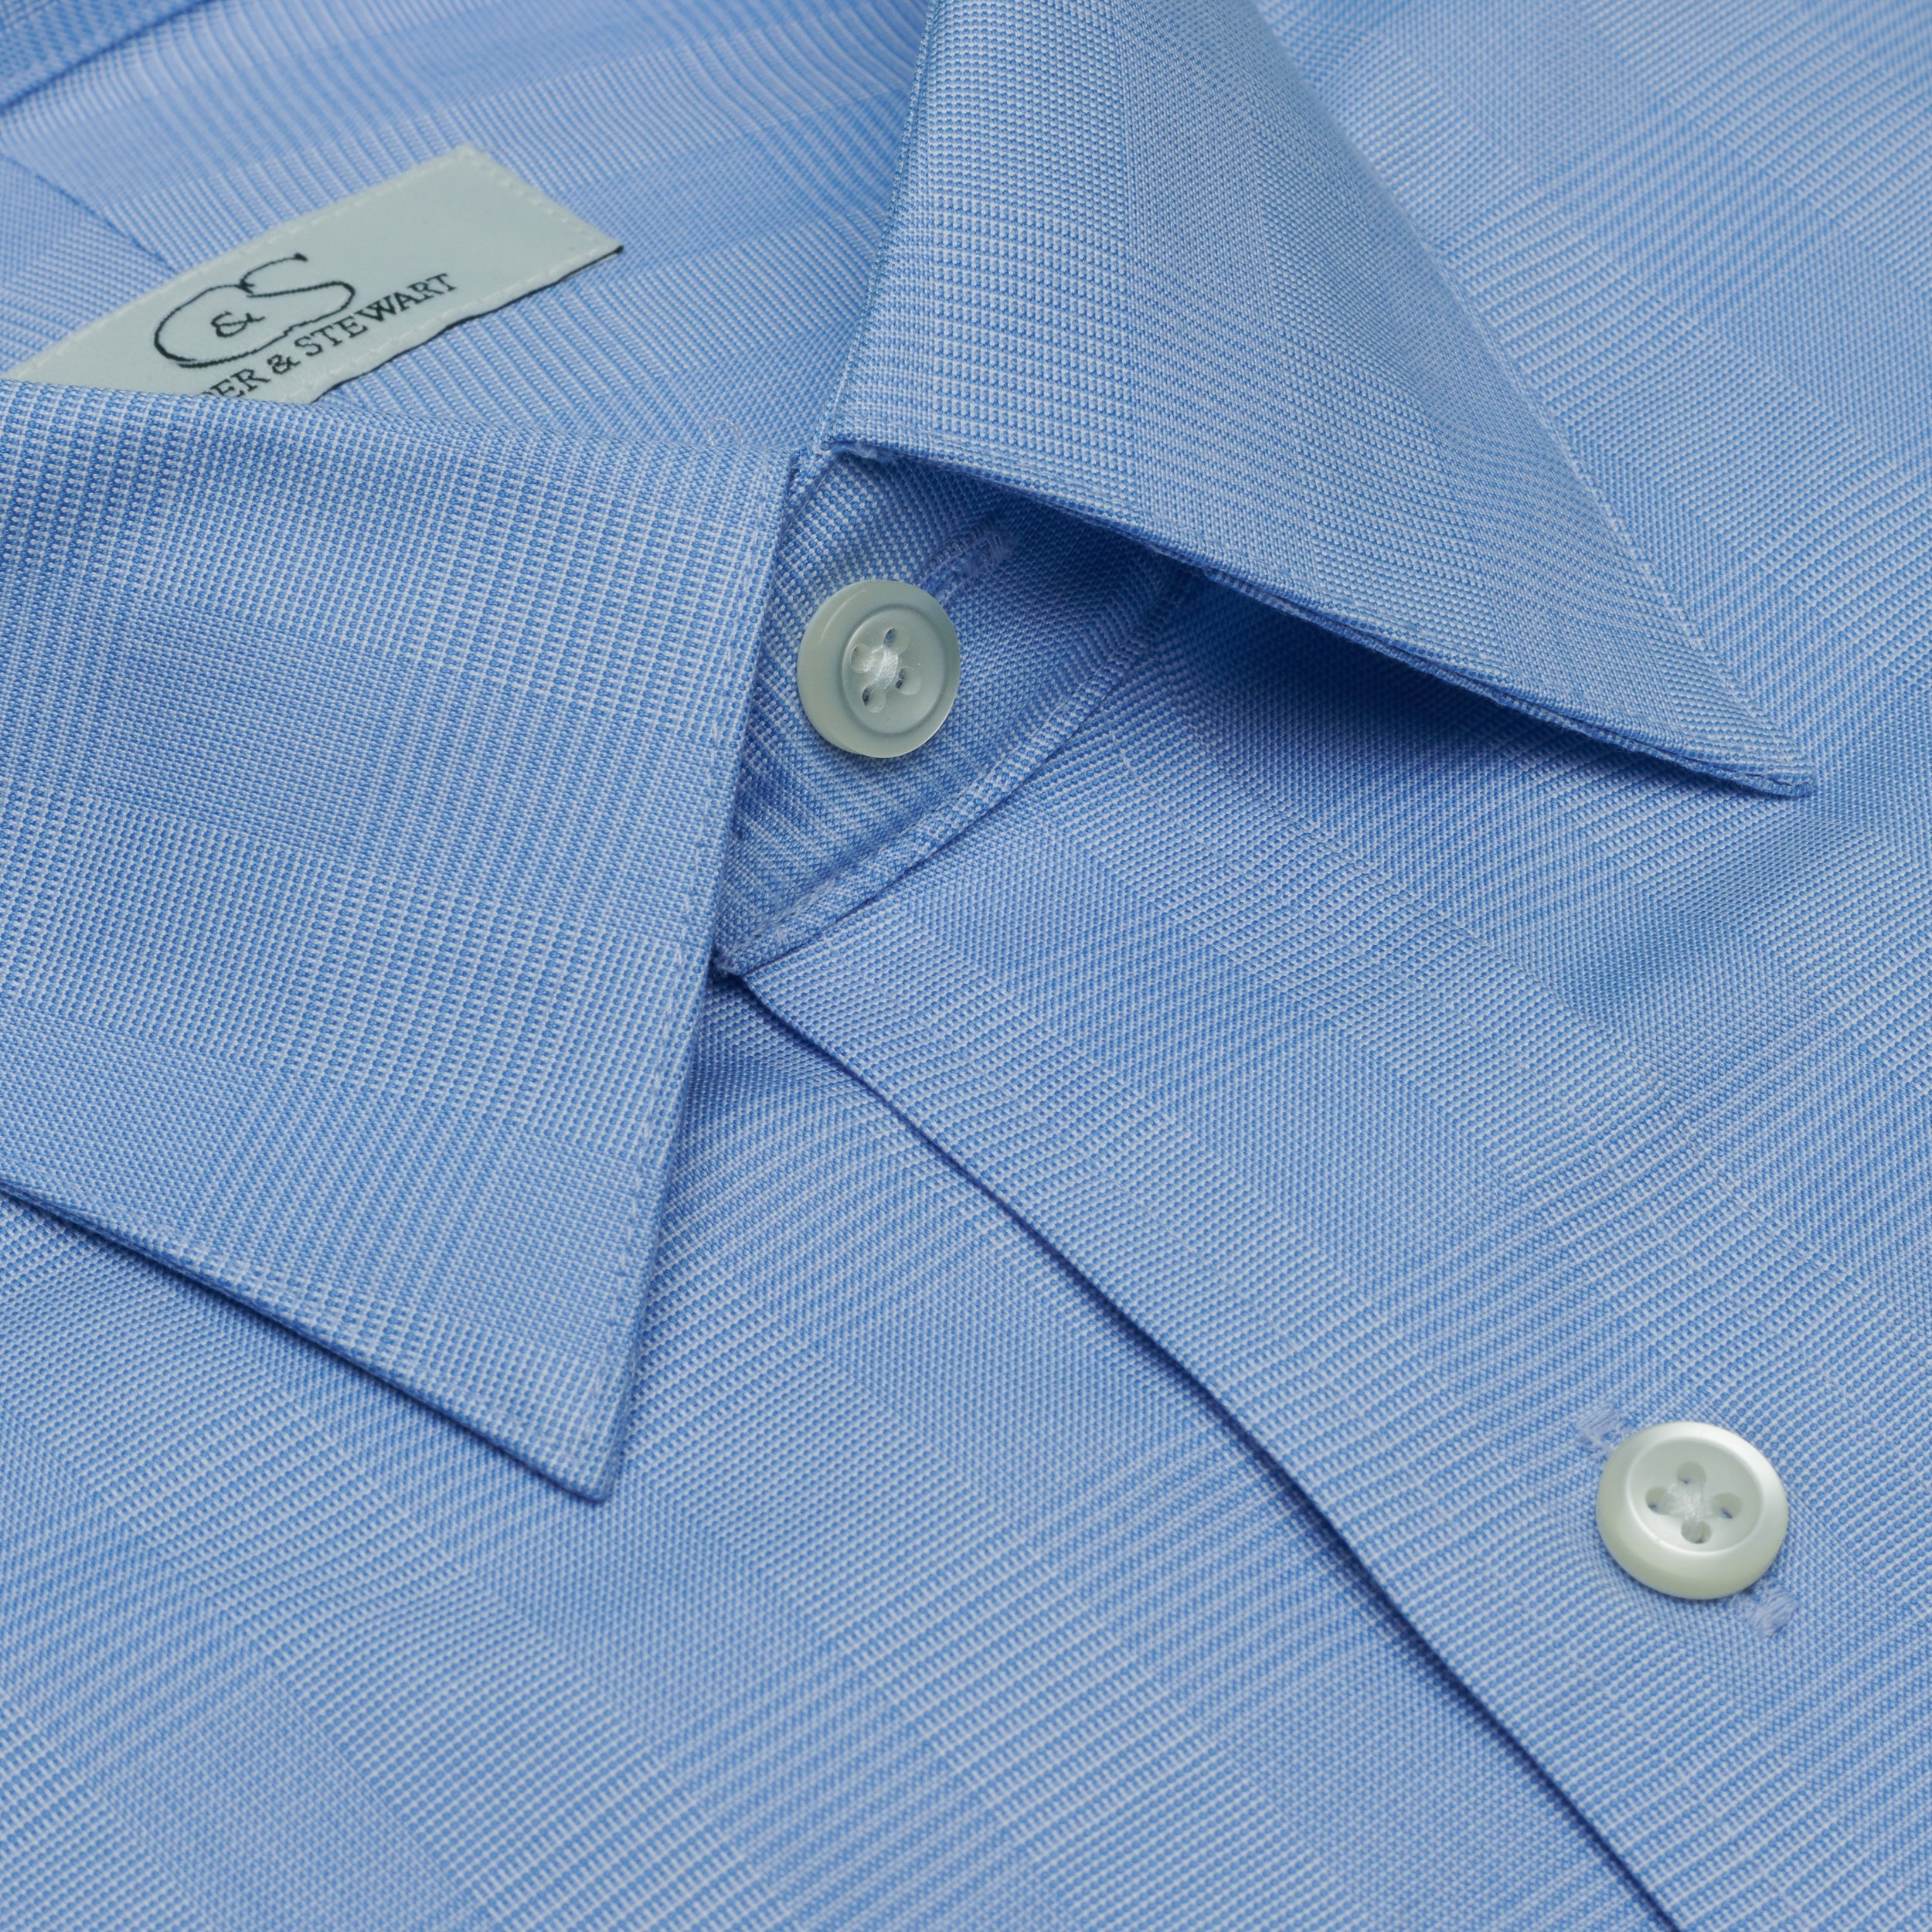 084 TF SC - Blue Glen Plaid Tailored Fit Spread Collar